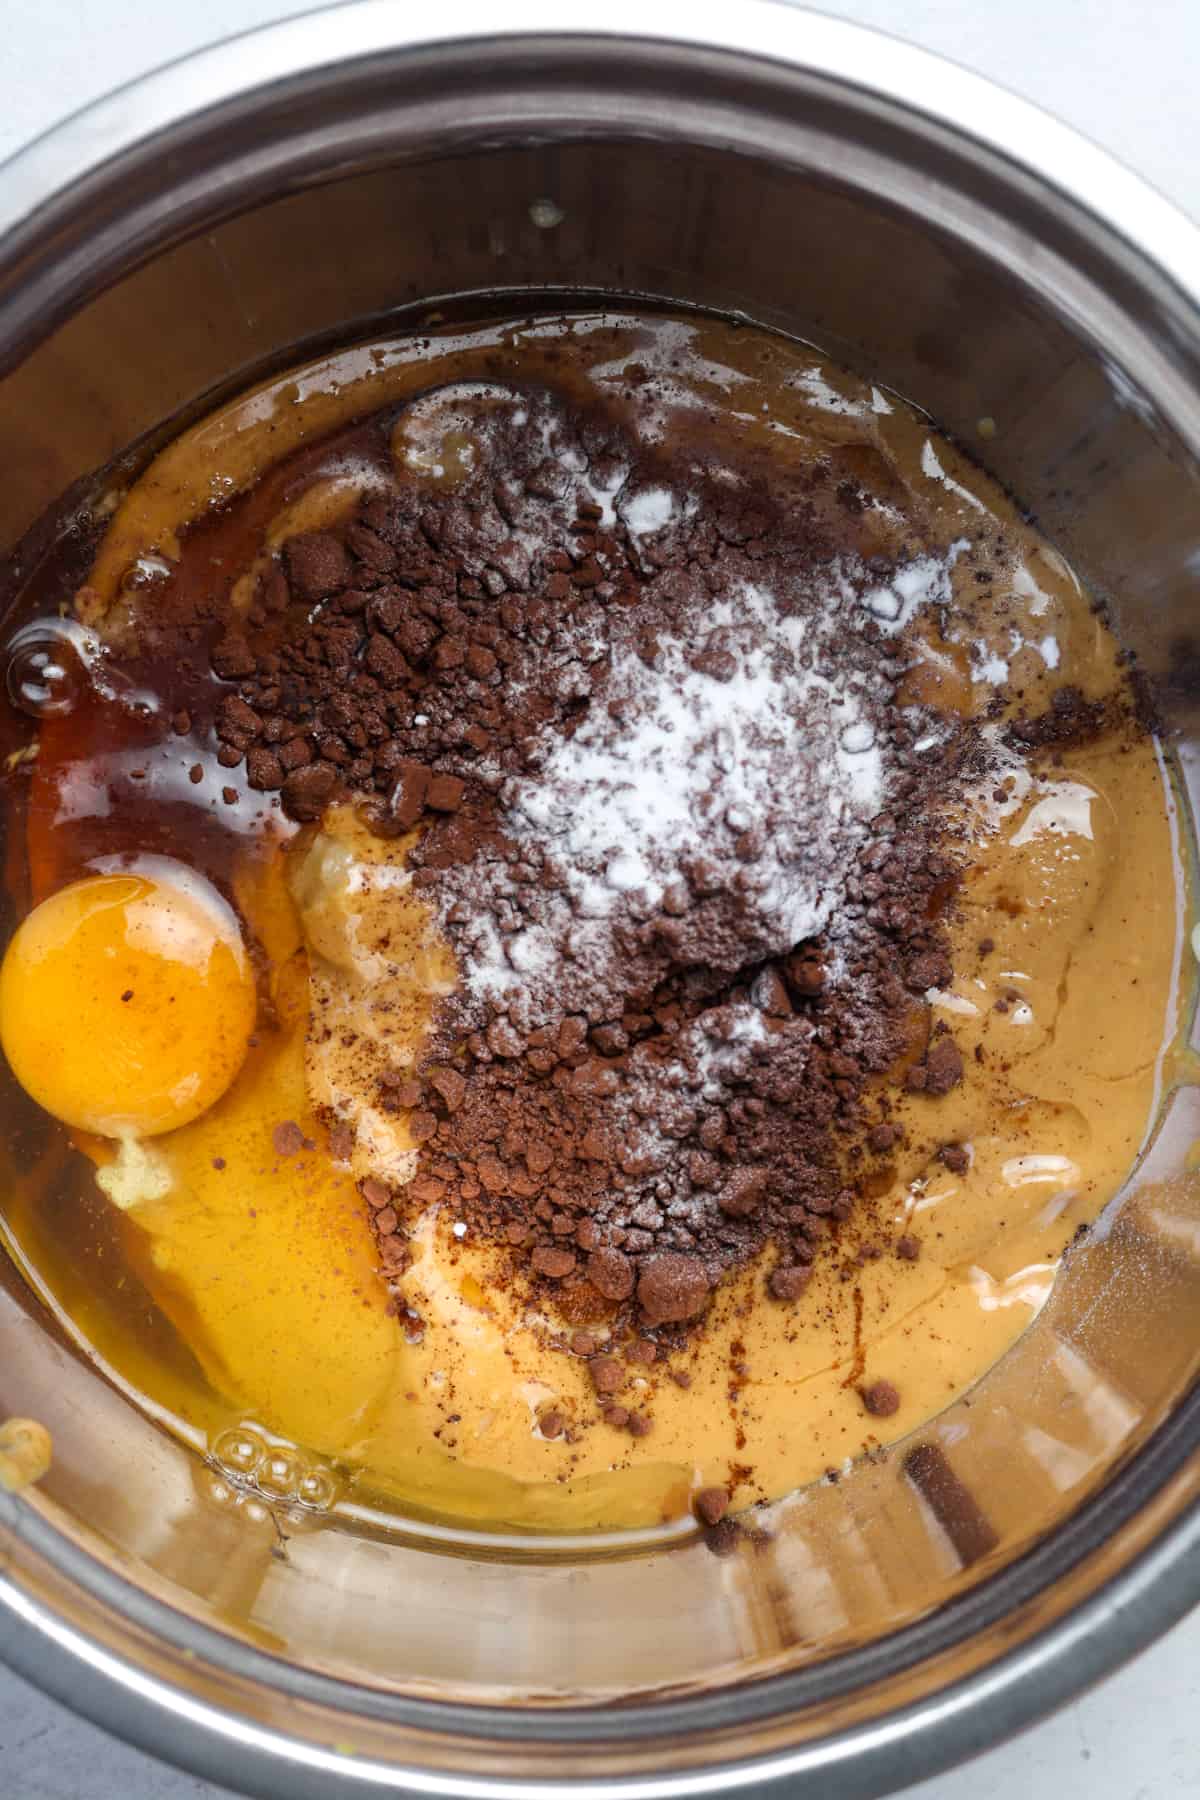 Egg, cocoa in bowl.